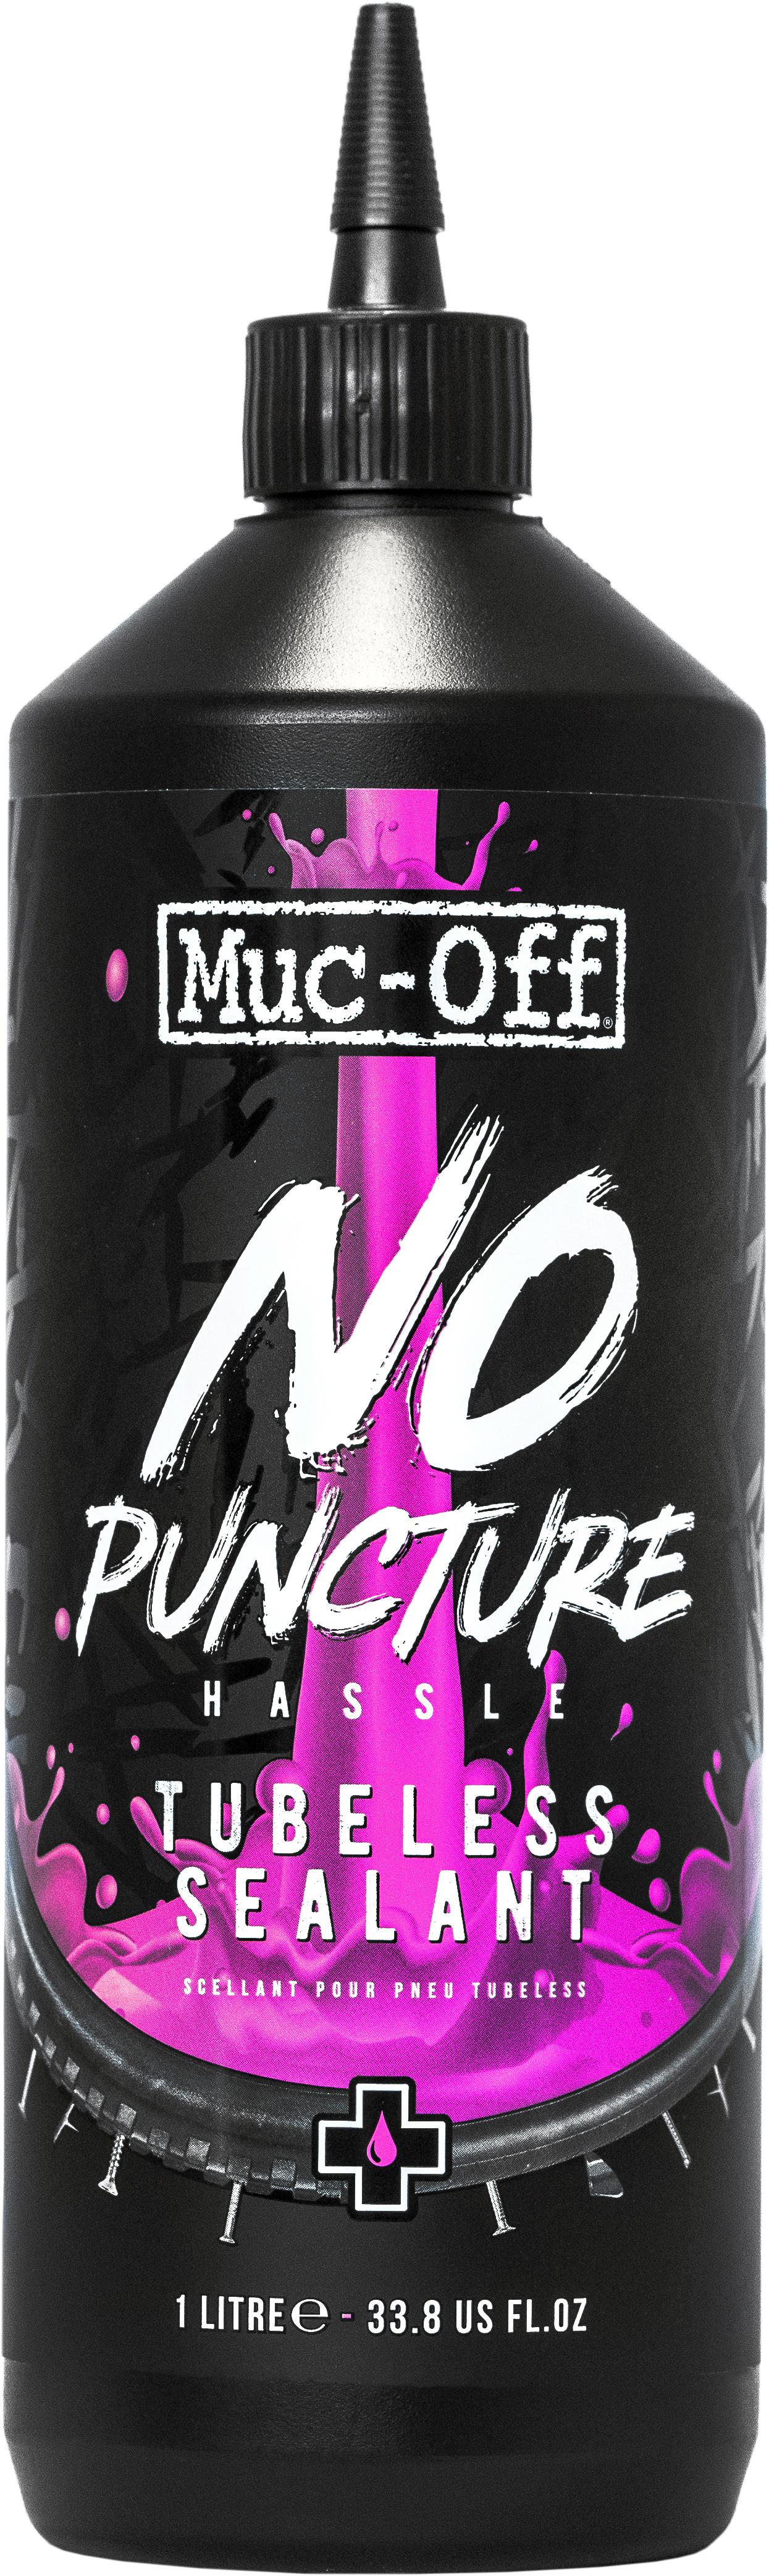 Muc-off No Puncture Hassle Tyre Sealant (1l)  Black